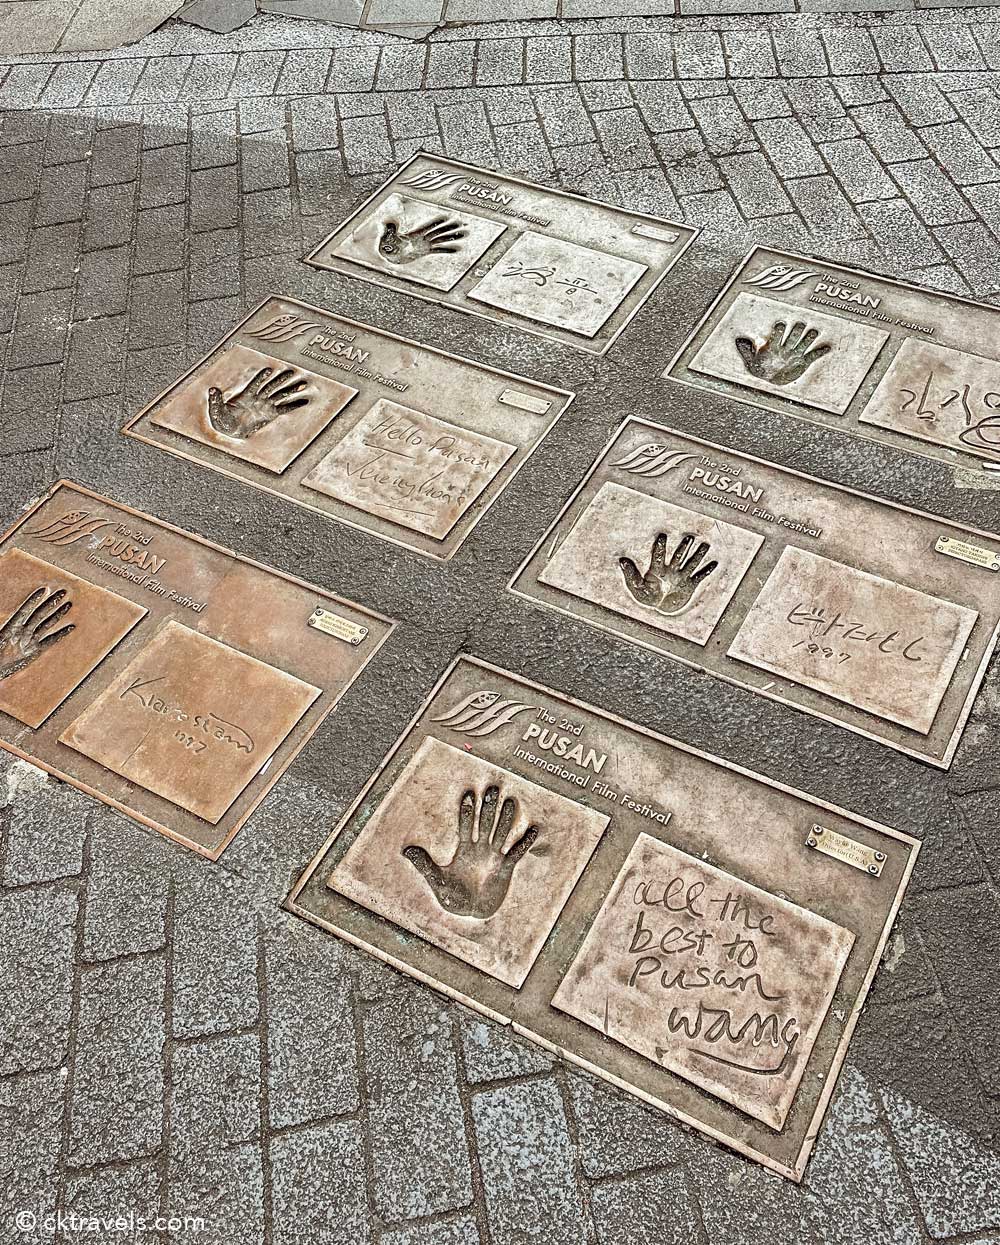 Biff Square Busan golden handprints